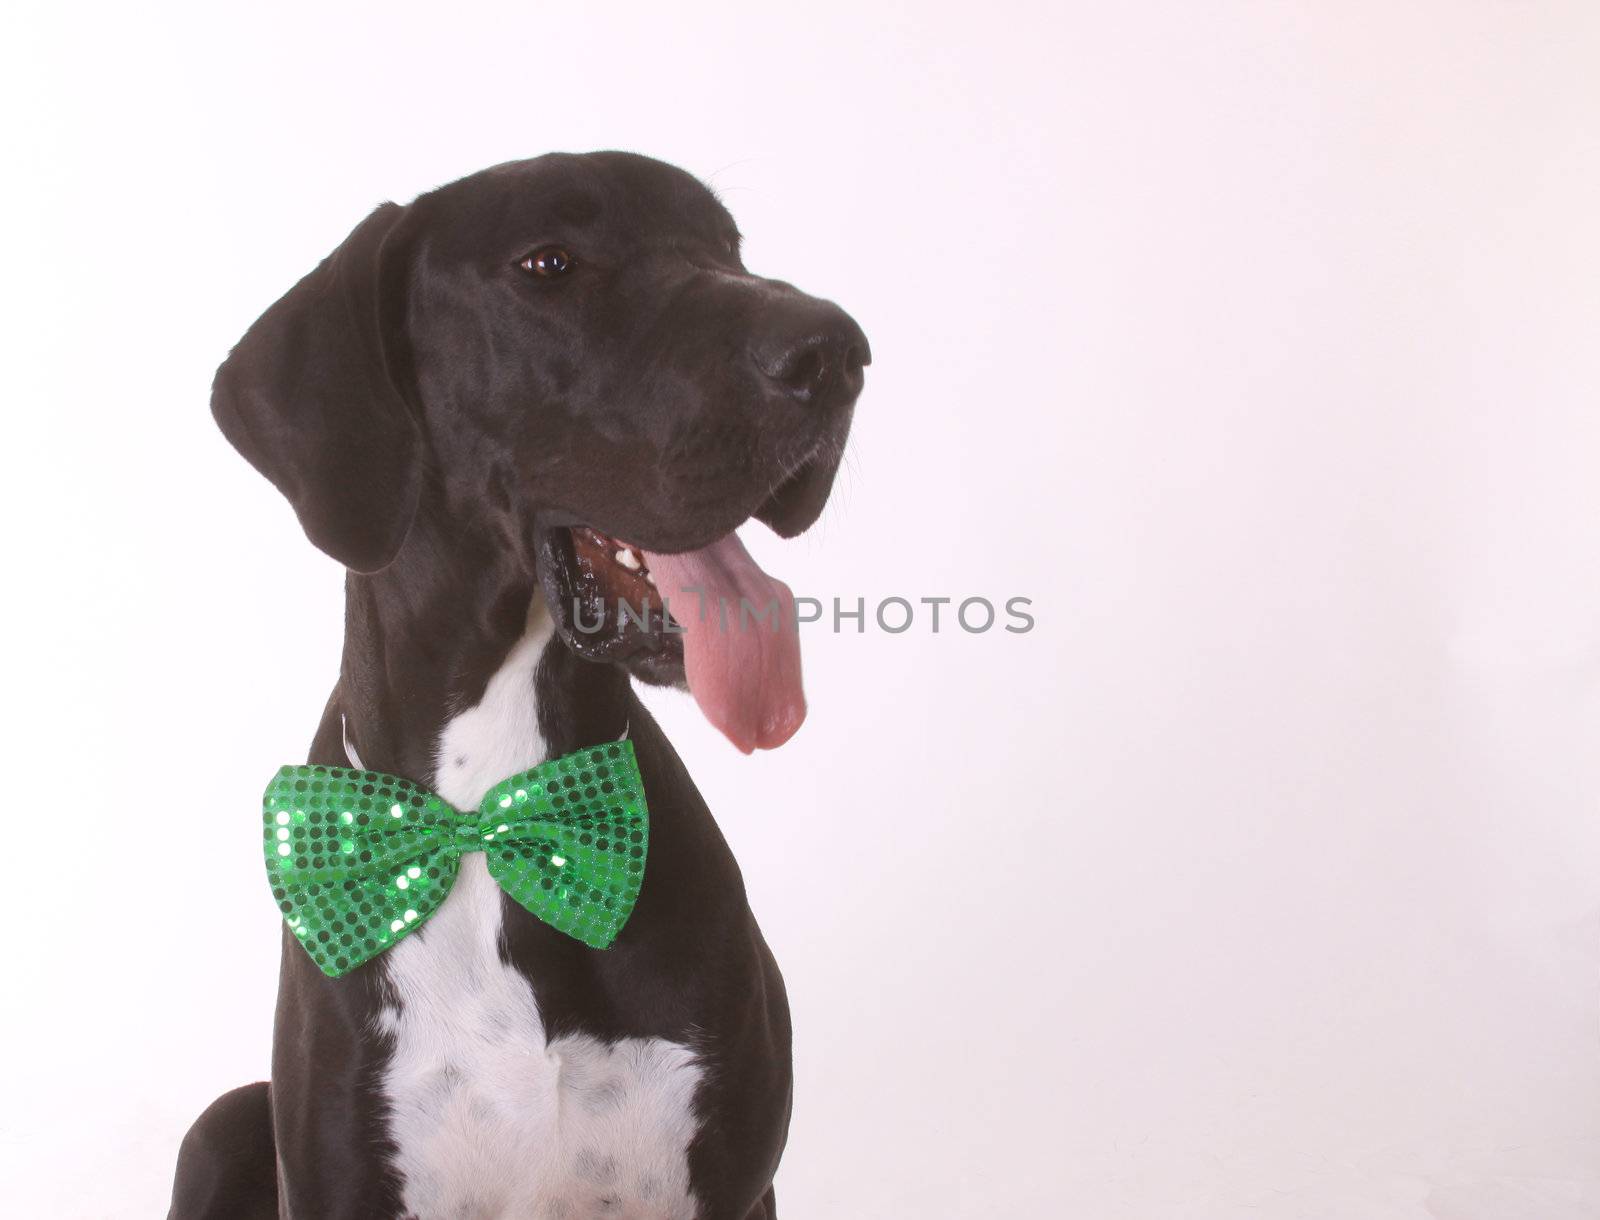 A dog, Great Dane, wearing a green bowtie.